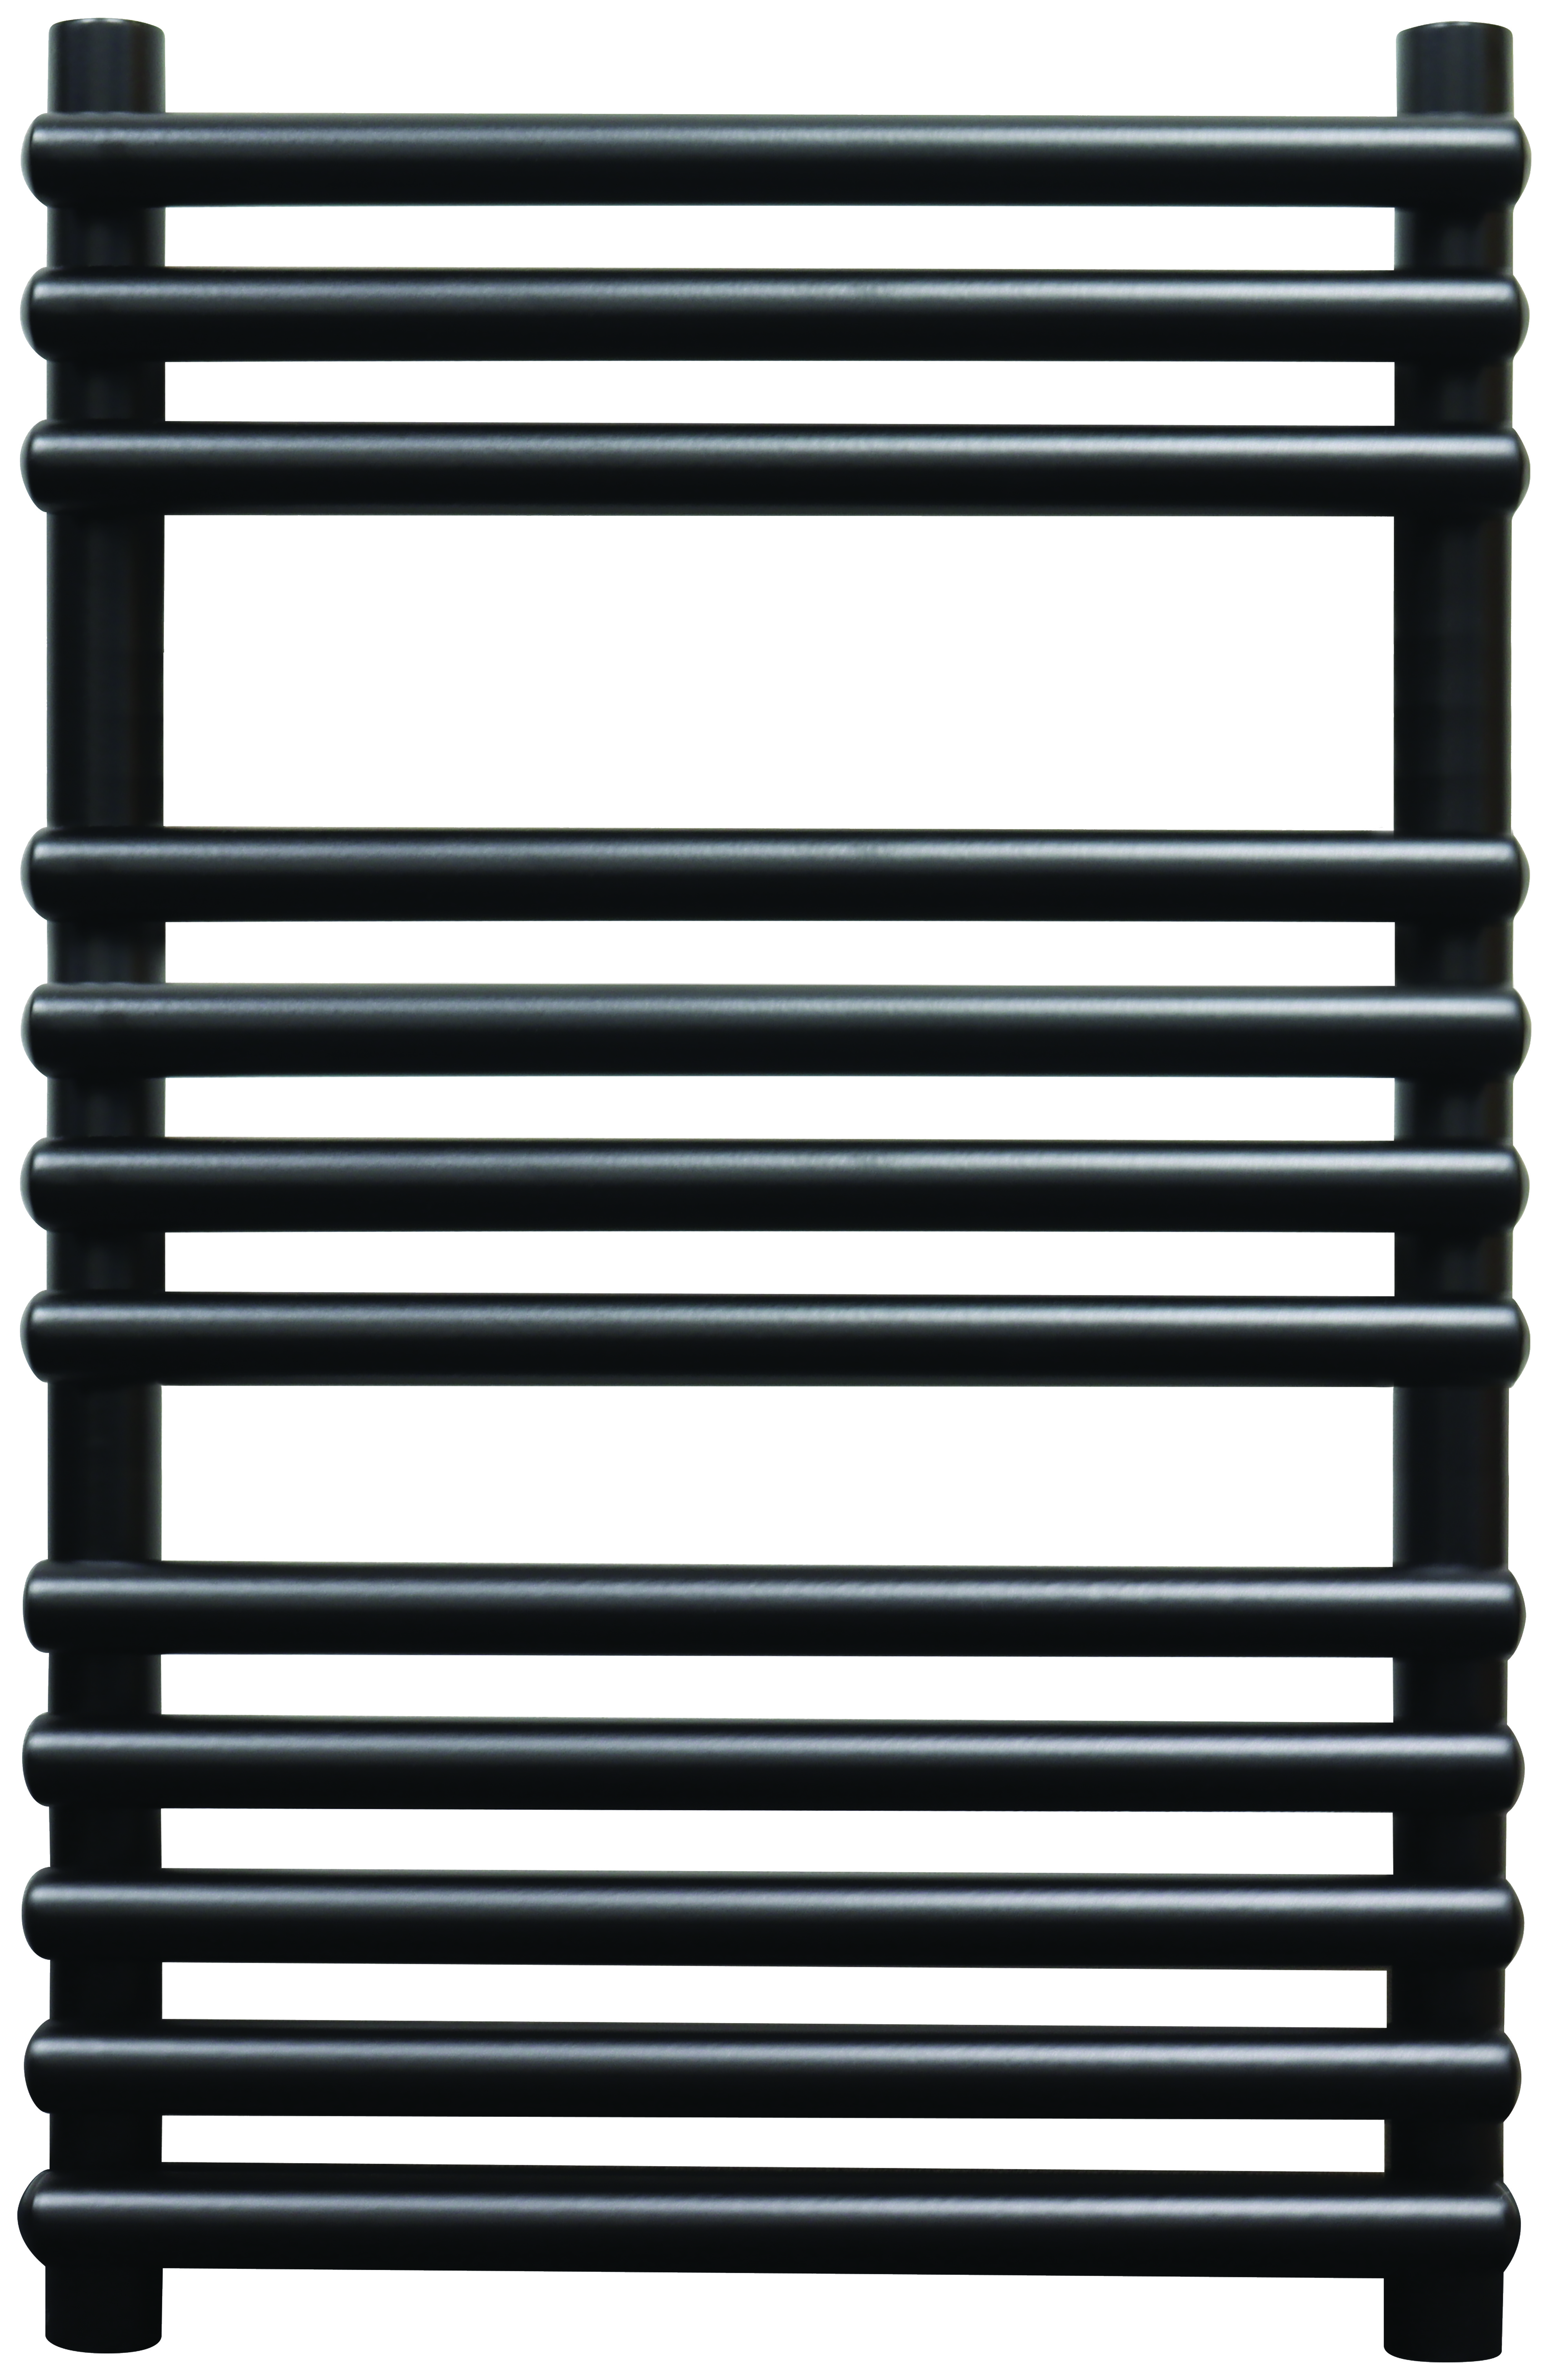 Towelrads Double Iridio Matt Black Towel Radiator - 800 x 500mm